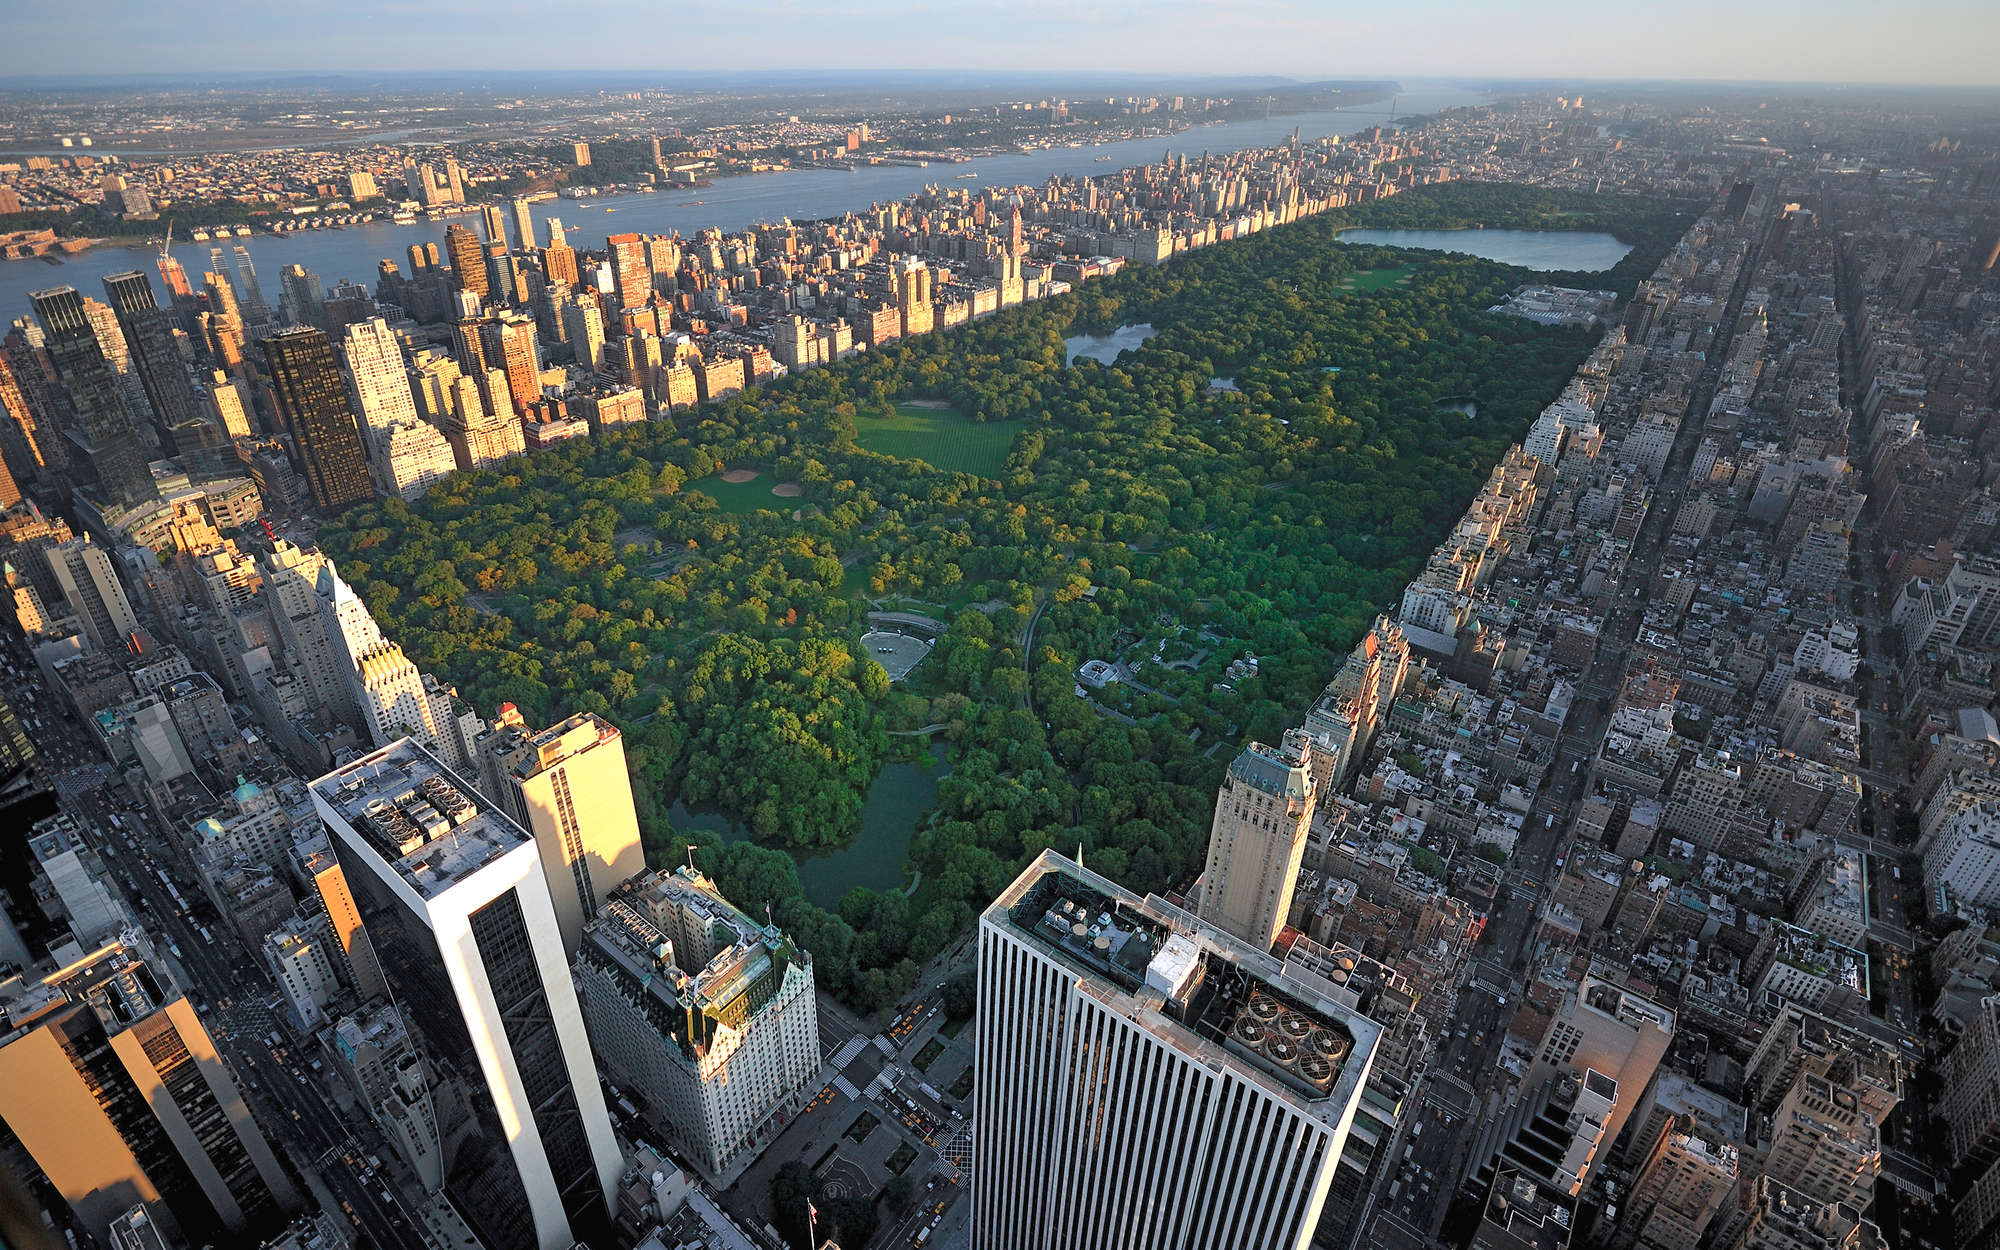             Digital behang New York Central Park van boven - Premium glad fleece
        